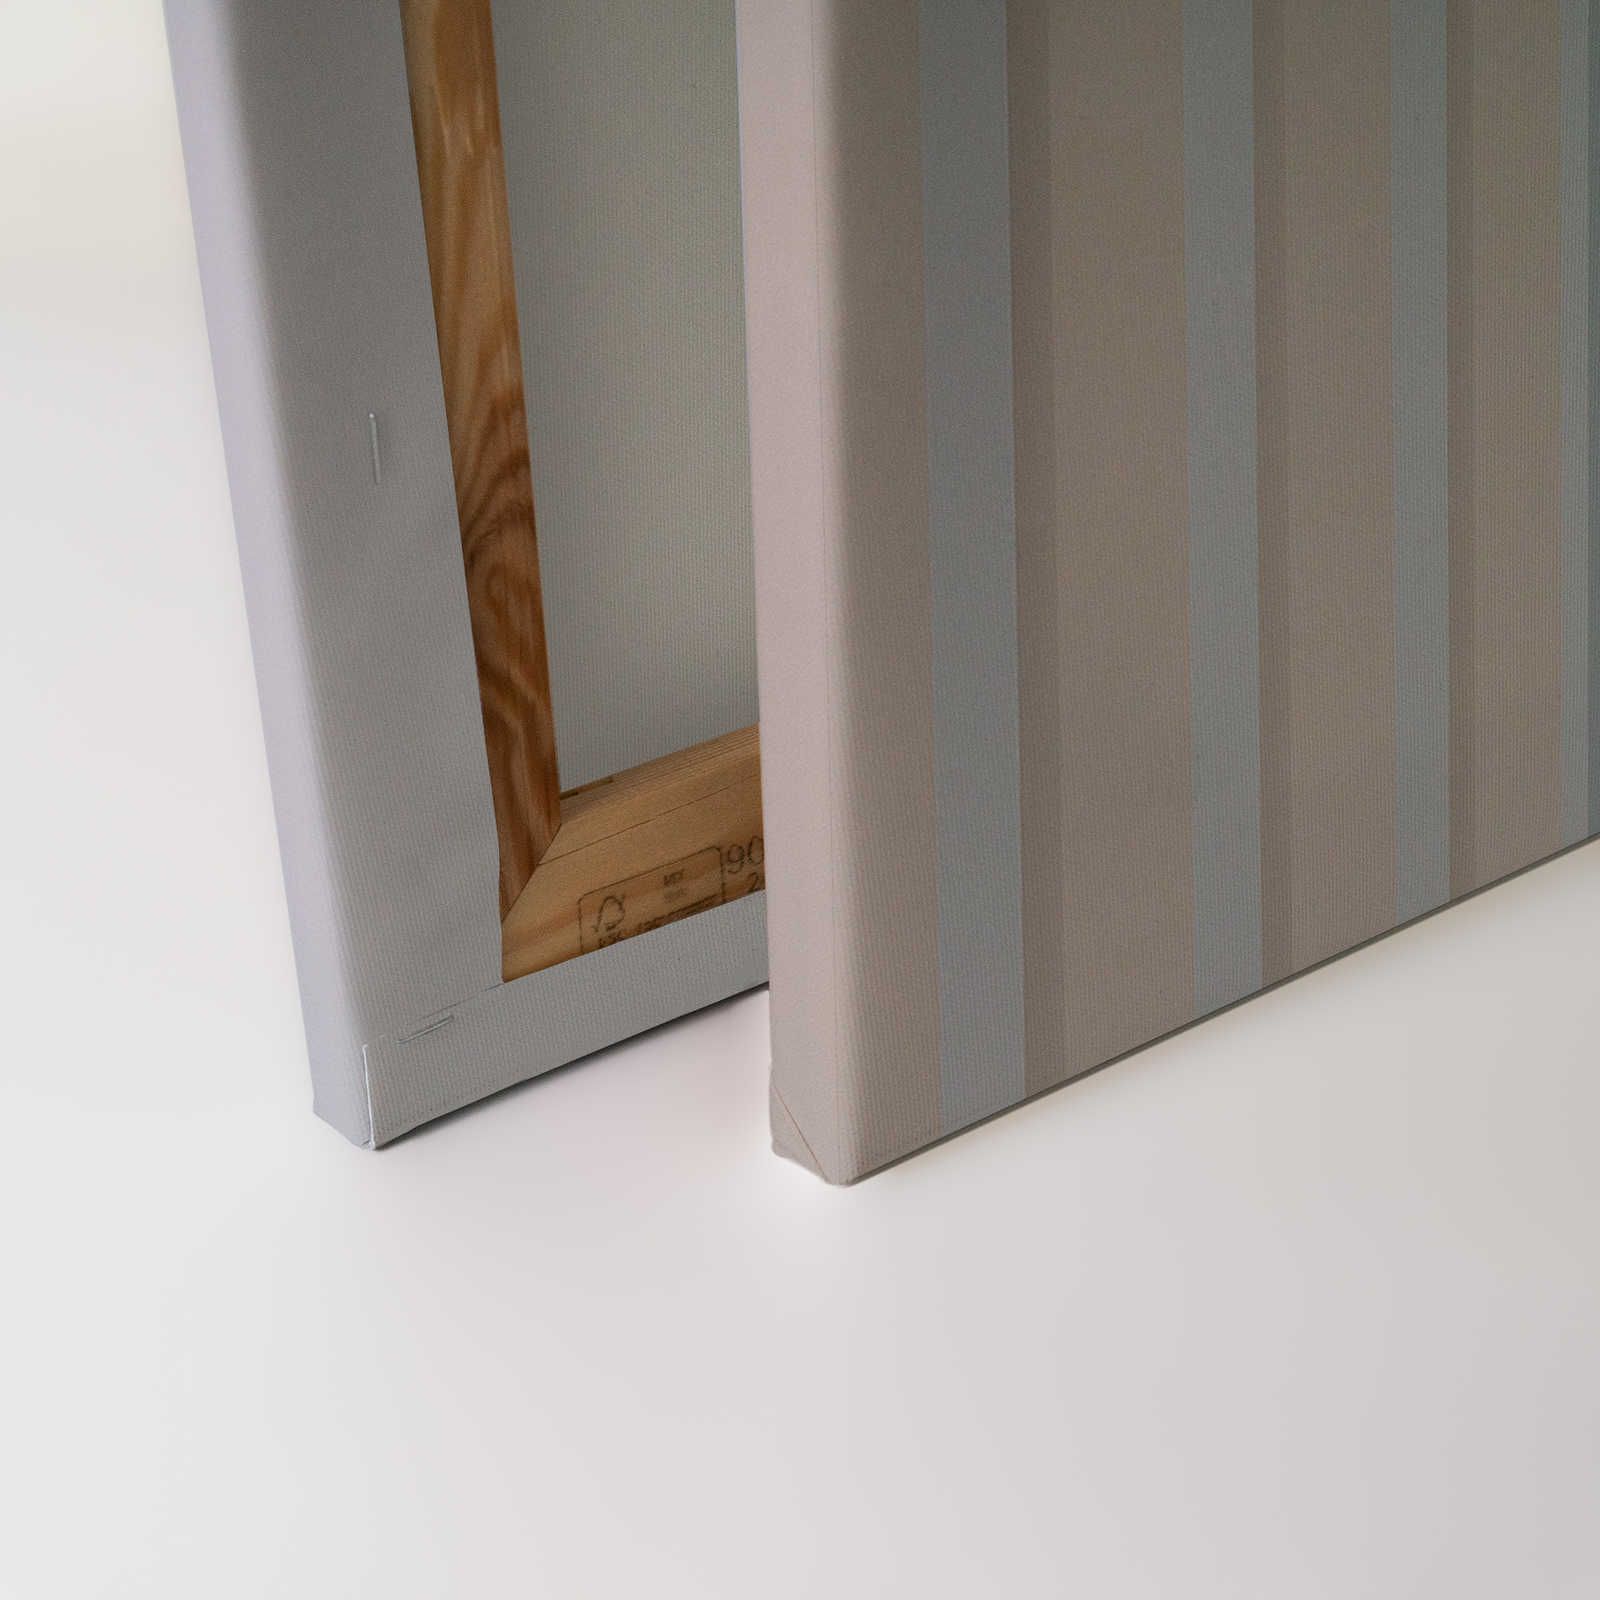             Illusion Room 2 - Canvas schilderij 3D Stripe Design in Blue & Grey - 0.90 m x 0.60 m
        